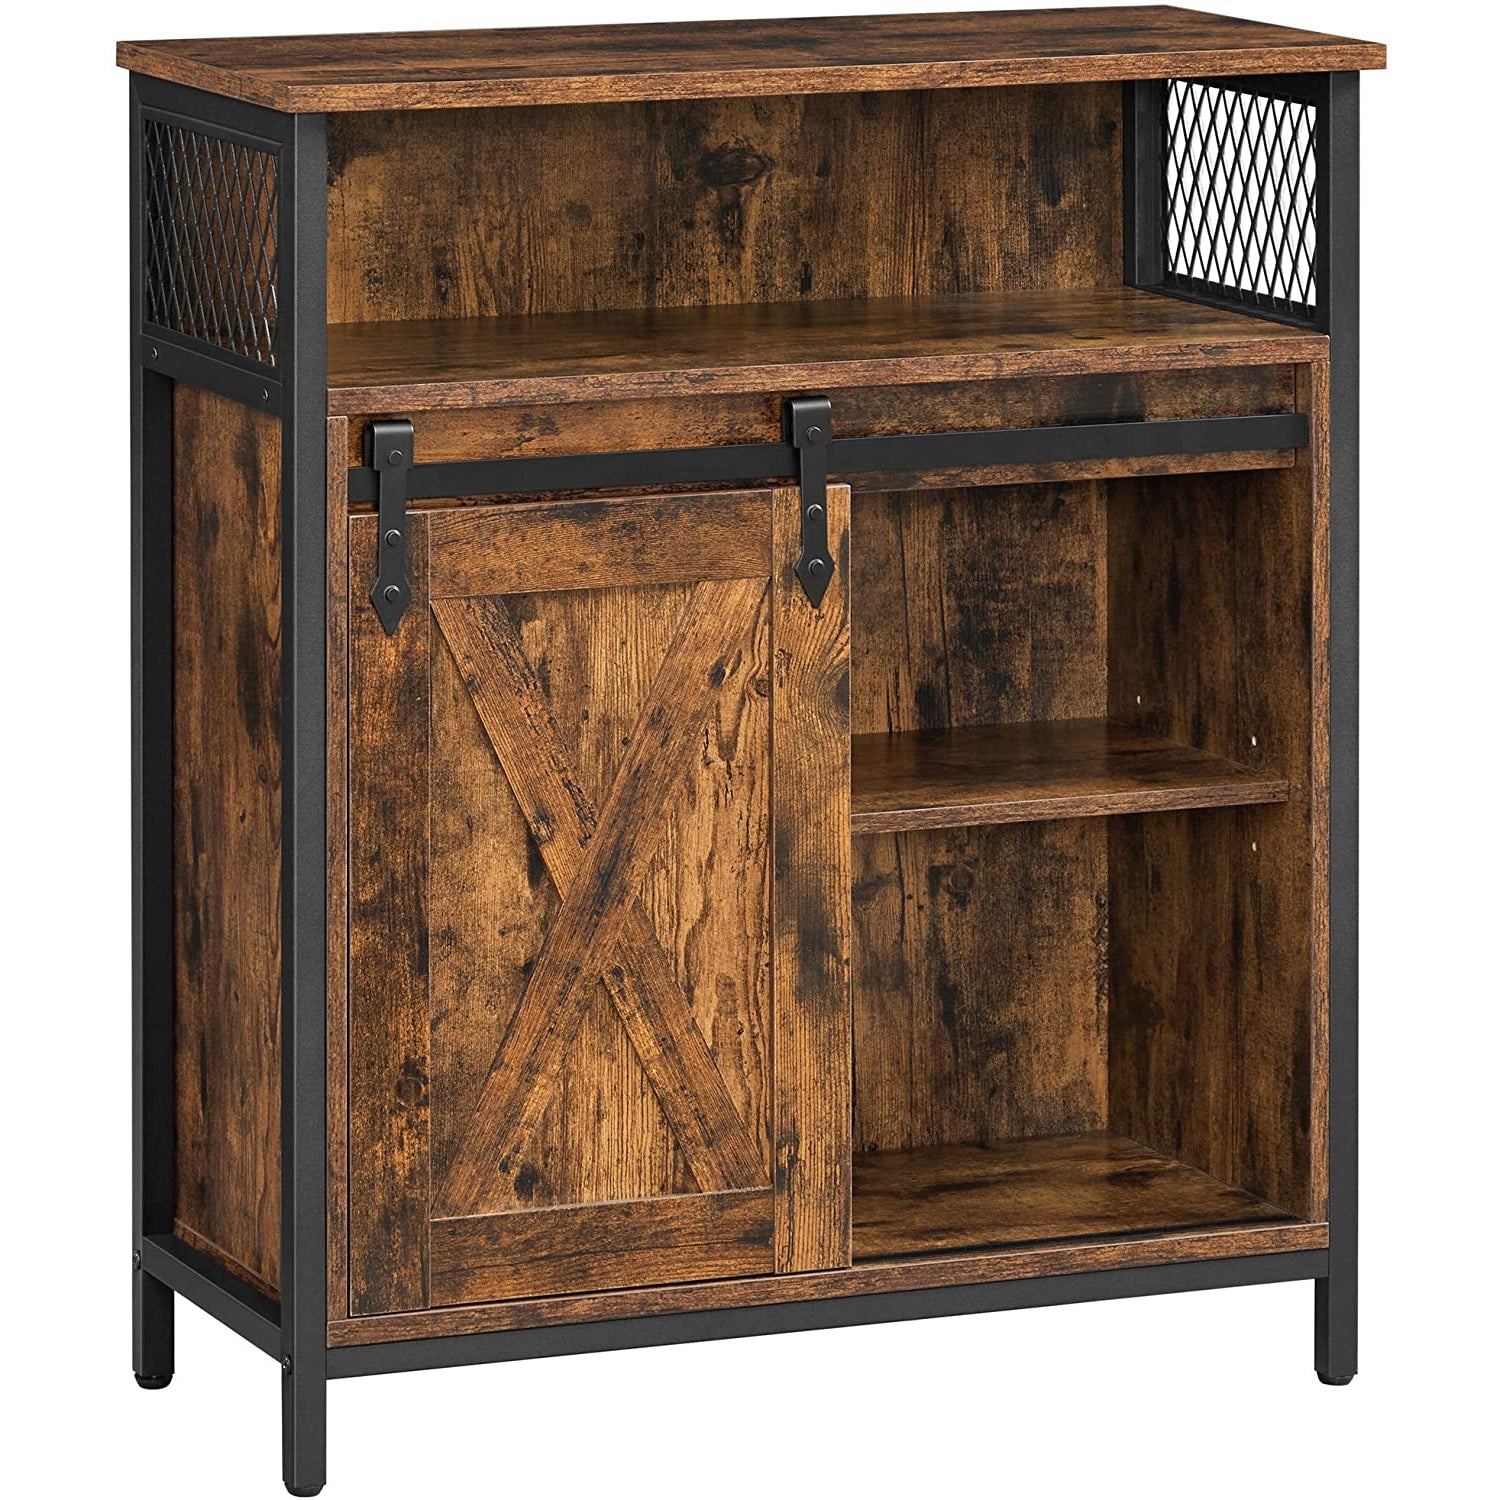 Nancy's Cody Sideboard - Storage Cabinet - Kitchen Cabinet - Sliding Door - Open Compartment - Adjustable Shelf - Industrial - Brown - Black - 70 x 30 x 80 cm